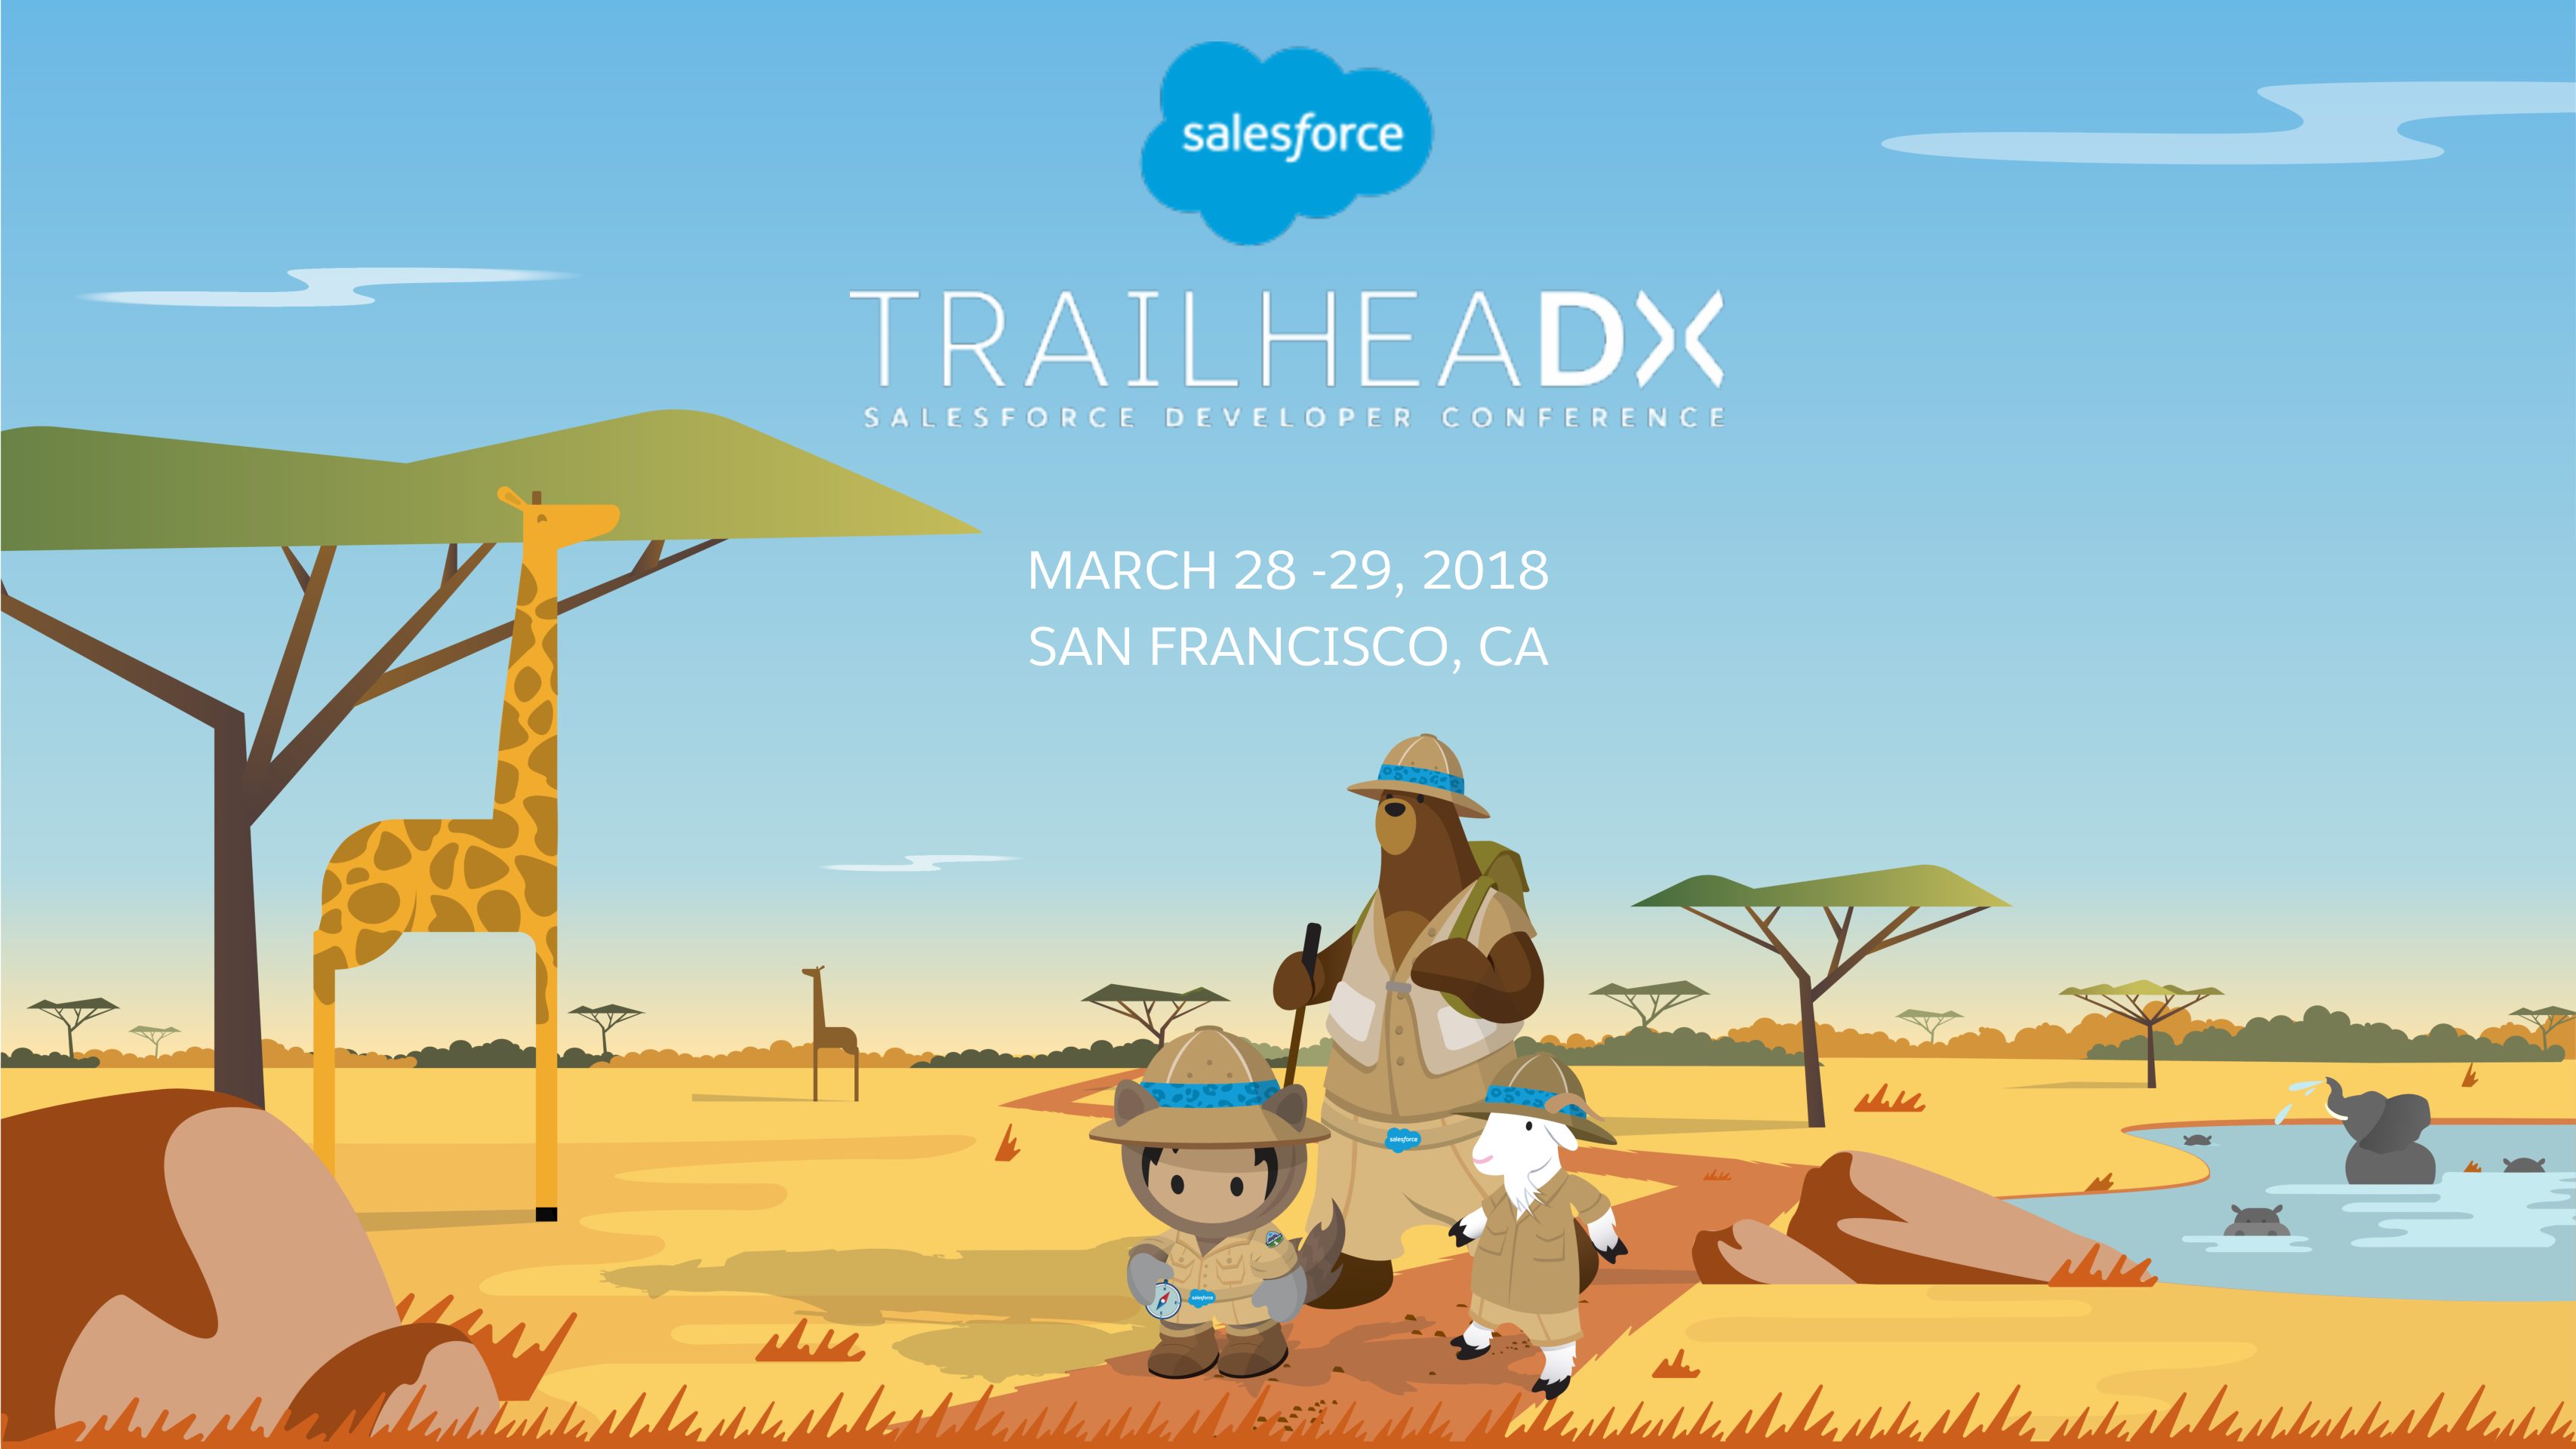 TrailheaDX ’18: How Commerce Cloud Aligns to SalesforceDX Development Methodology